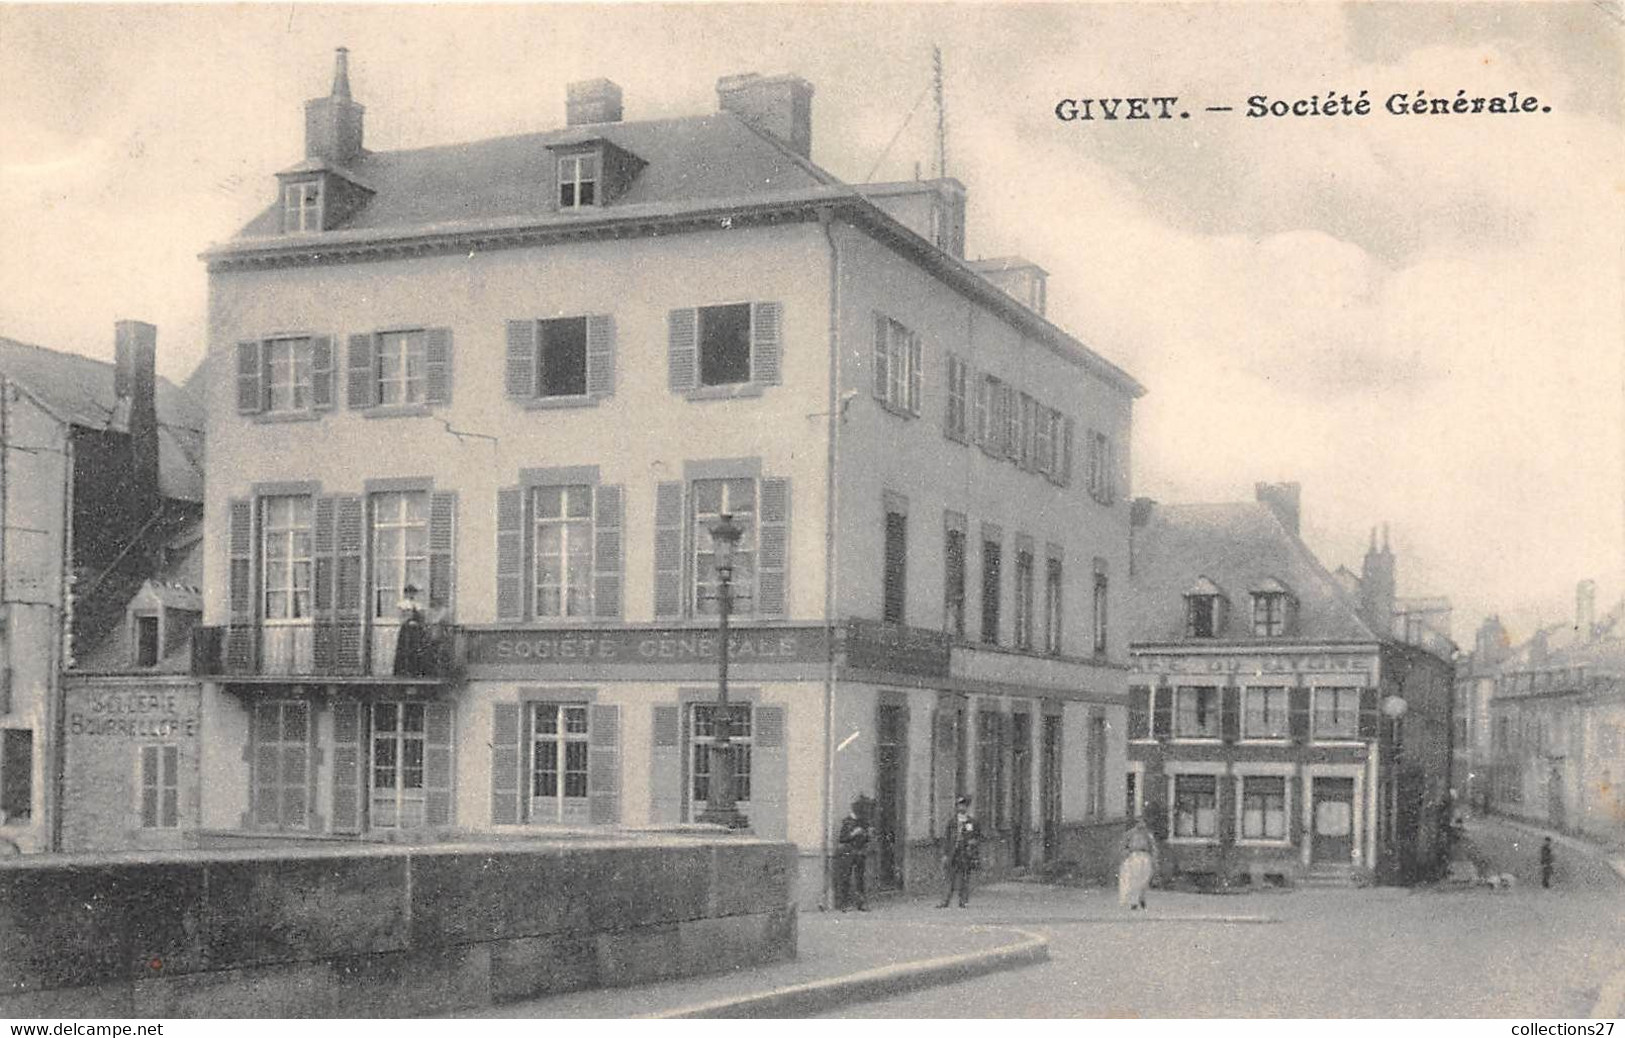 08-GIVET - SOCIETE GENERALE - Banche